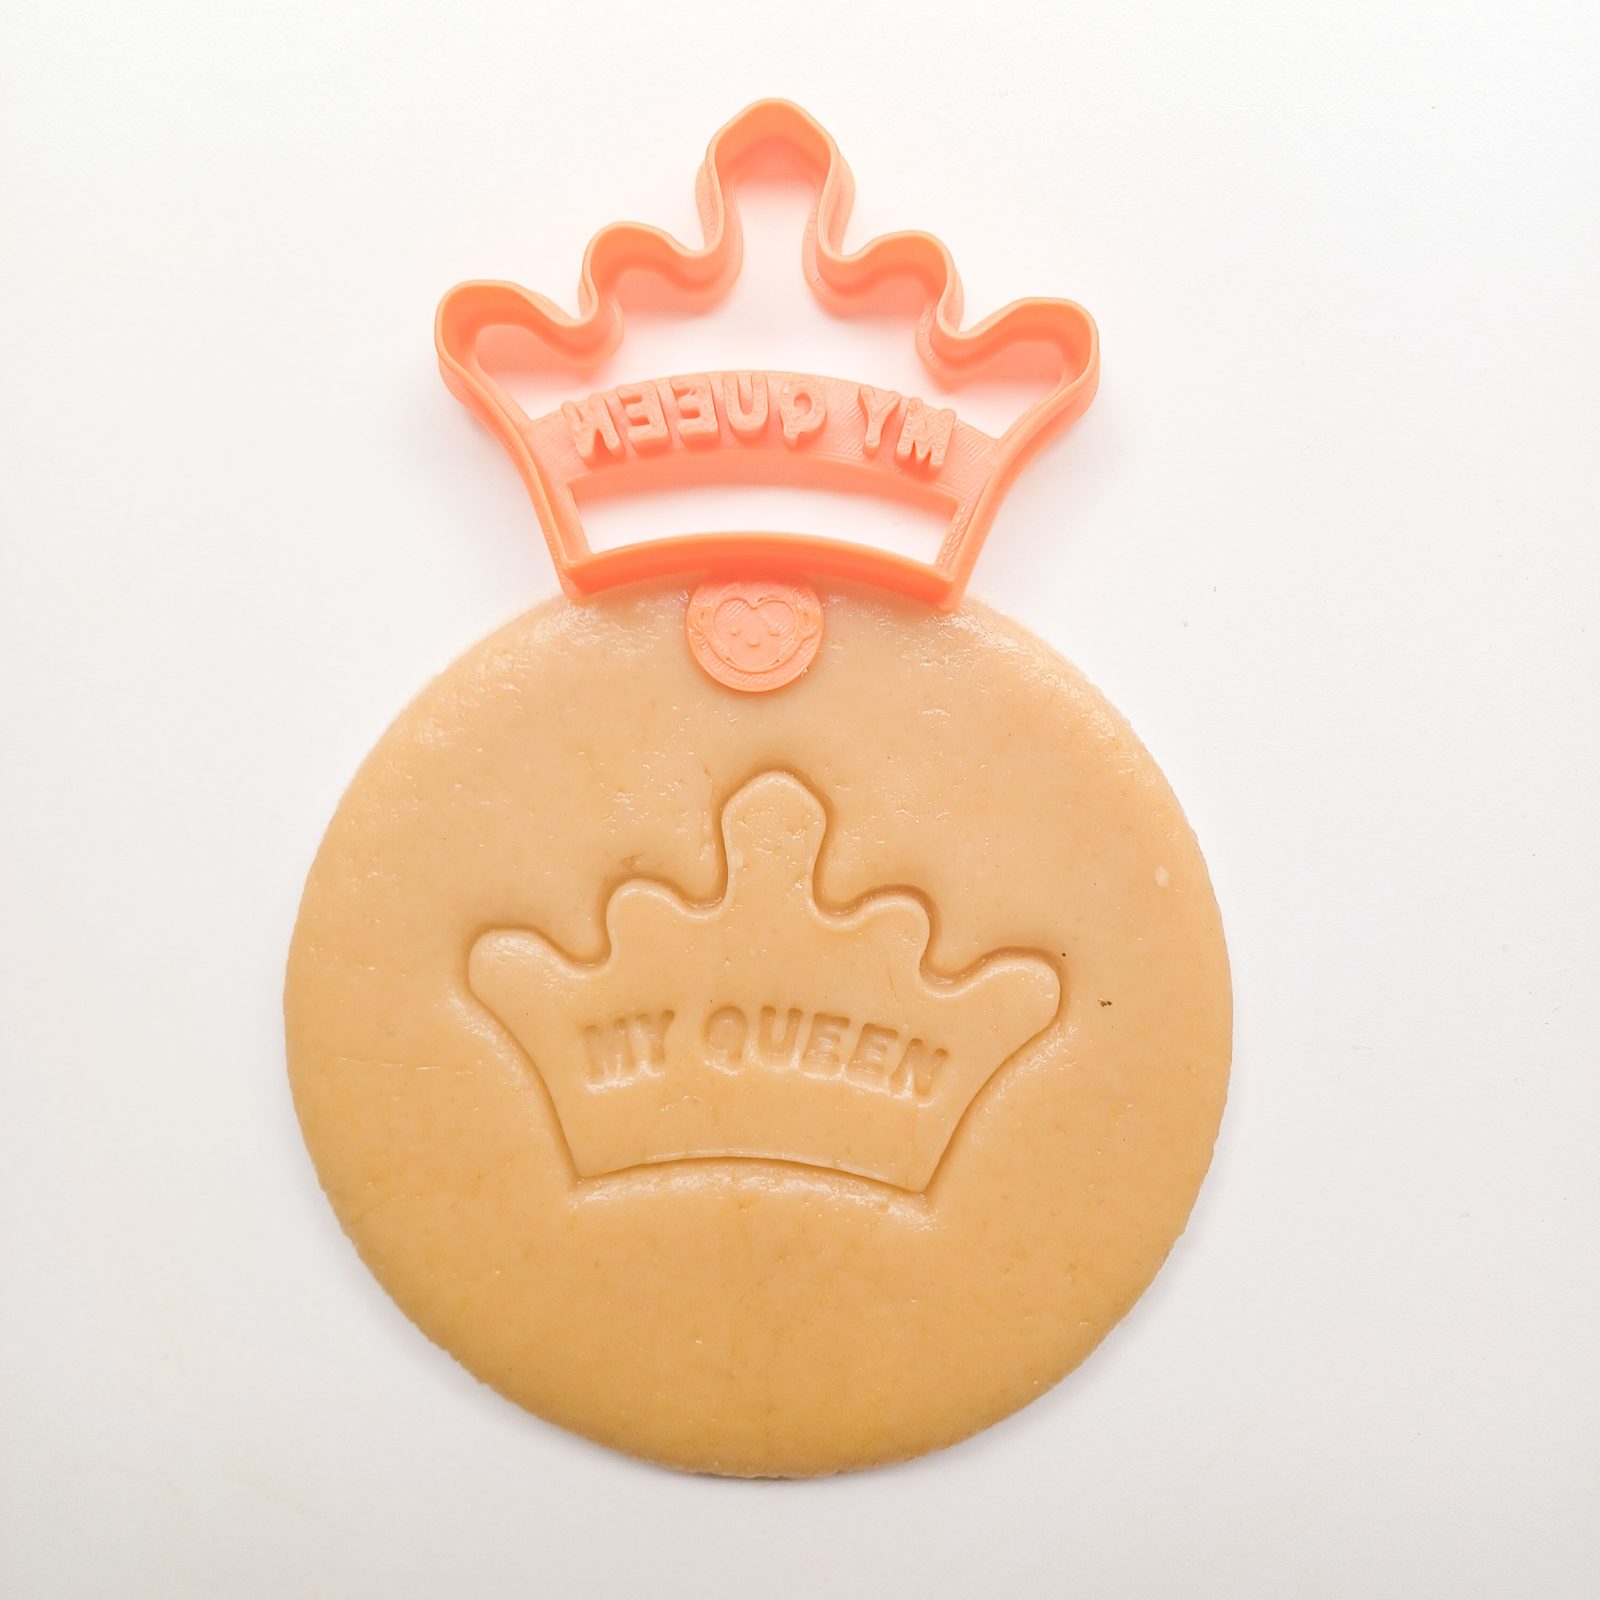 My Queen Crown Cookie Cutter